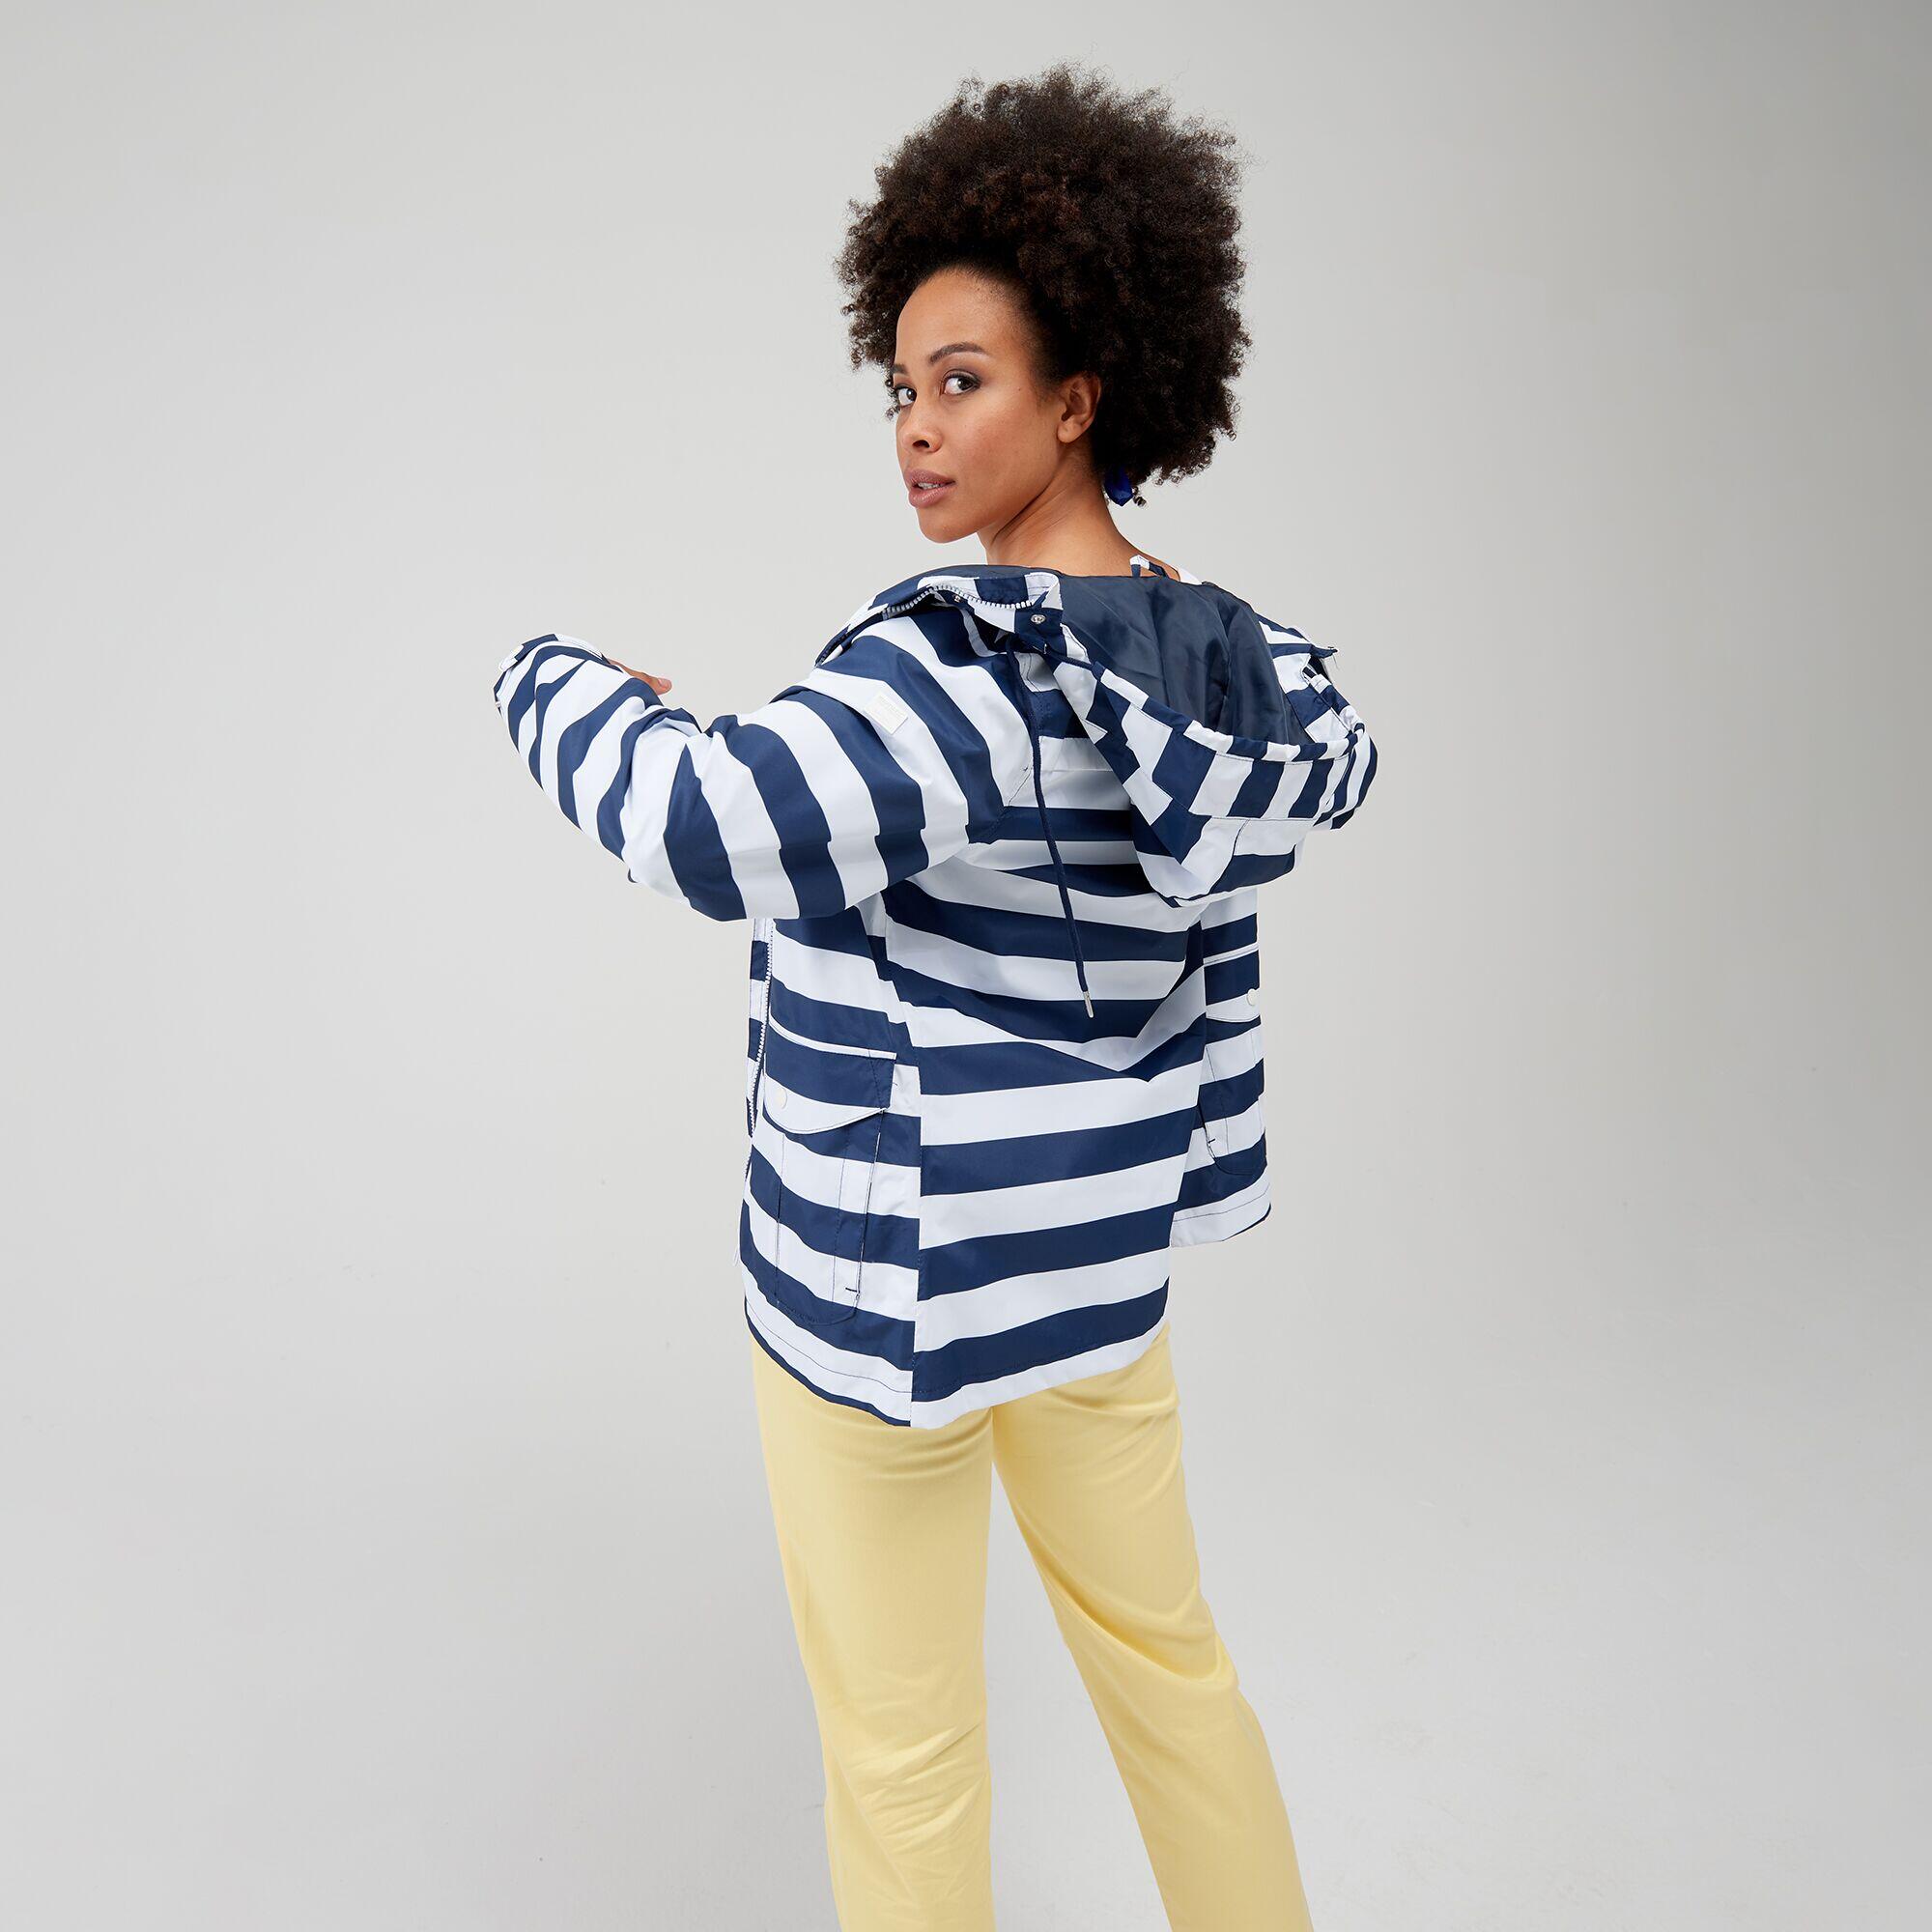 Bayarma Women's Walking Cotton Jacket - Navy Stripe 2/6